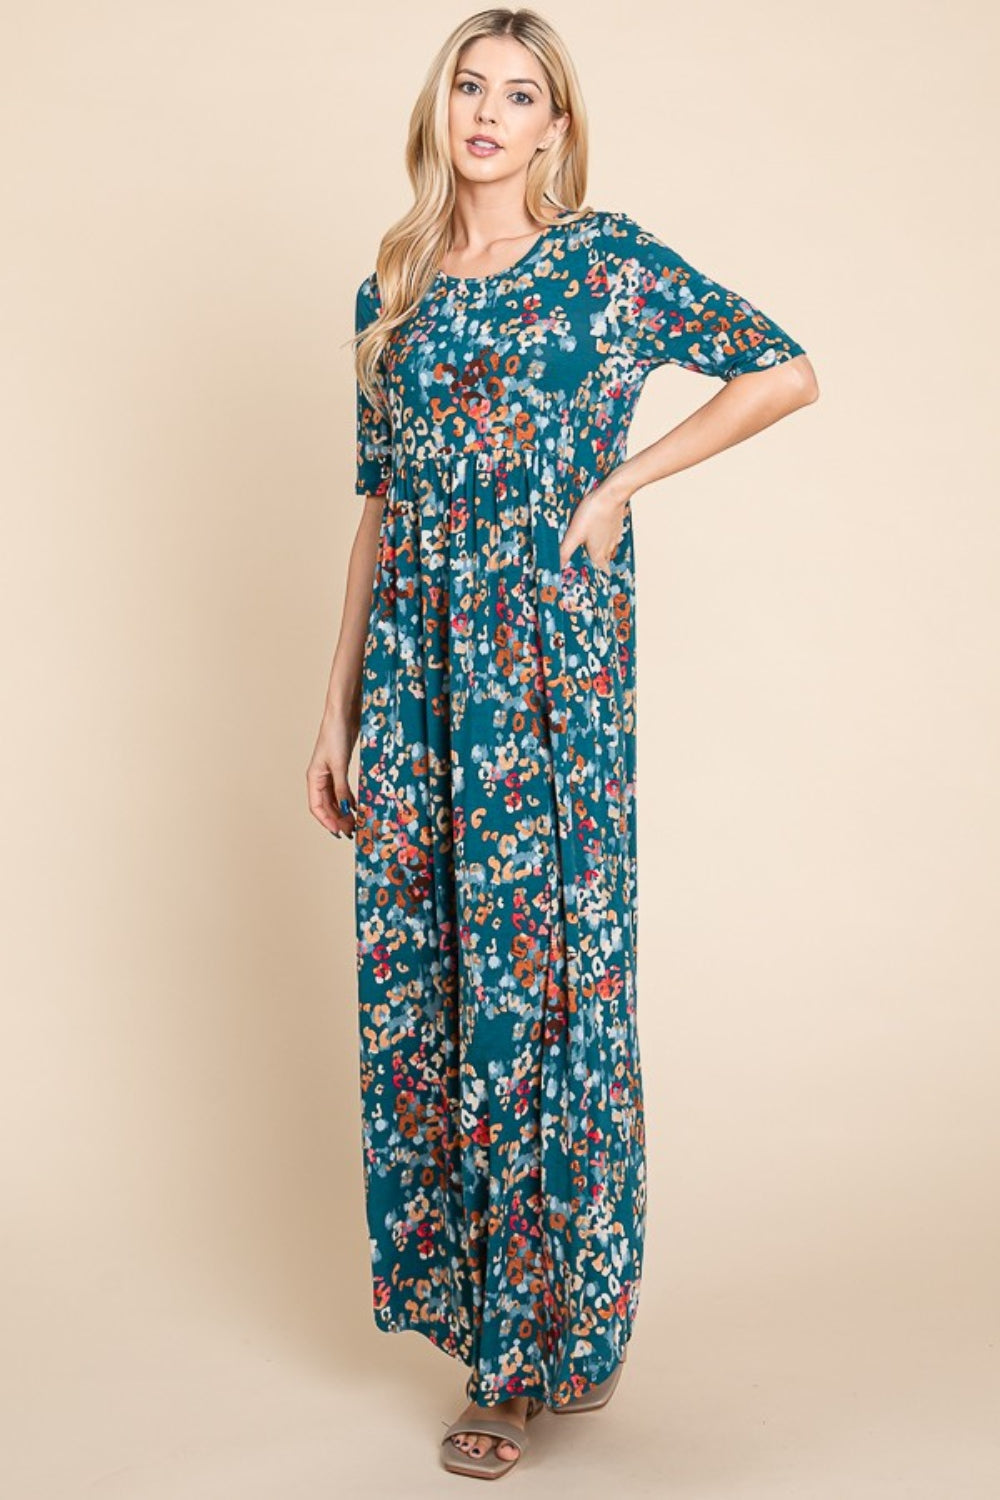 Stylish BOMBOM Printed Maxi Dress - Elegant Shirred Long Dress, Perfect for Evening Events & Summer Fashion